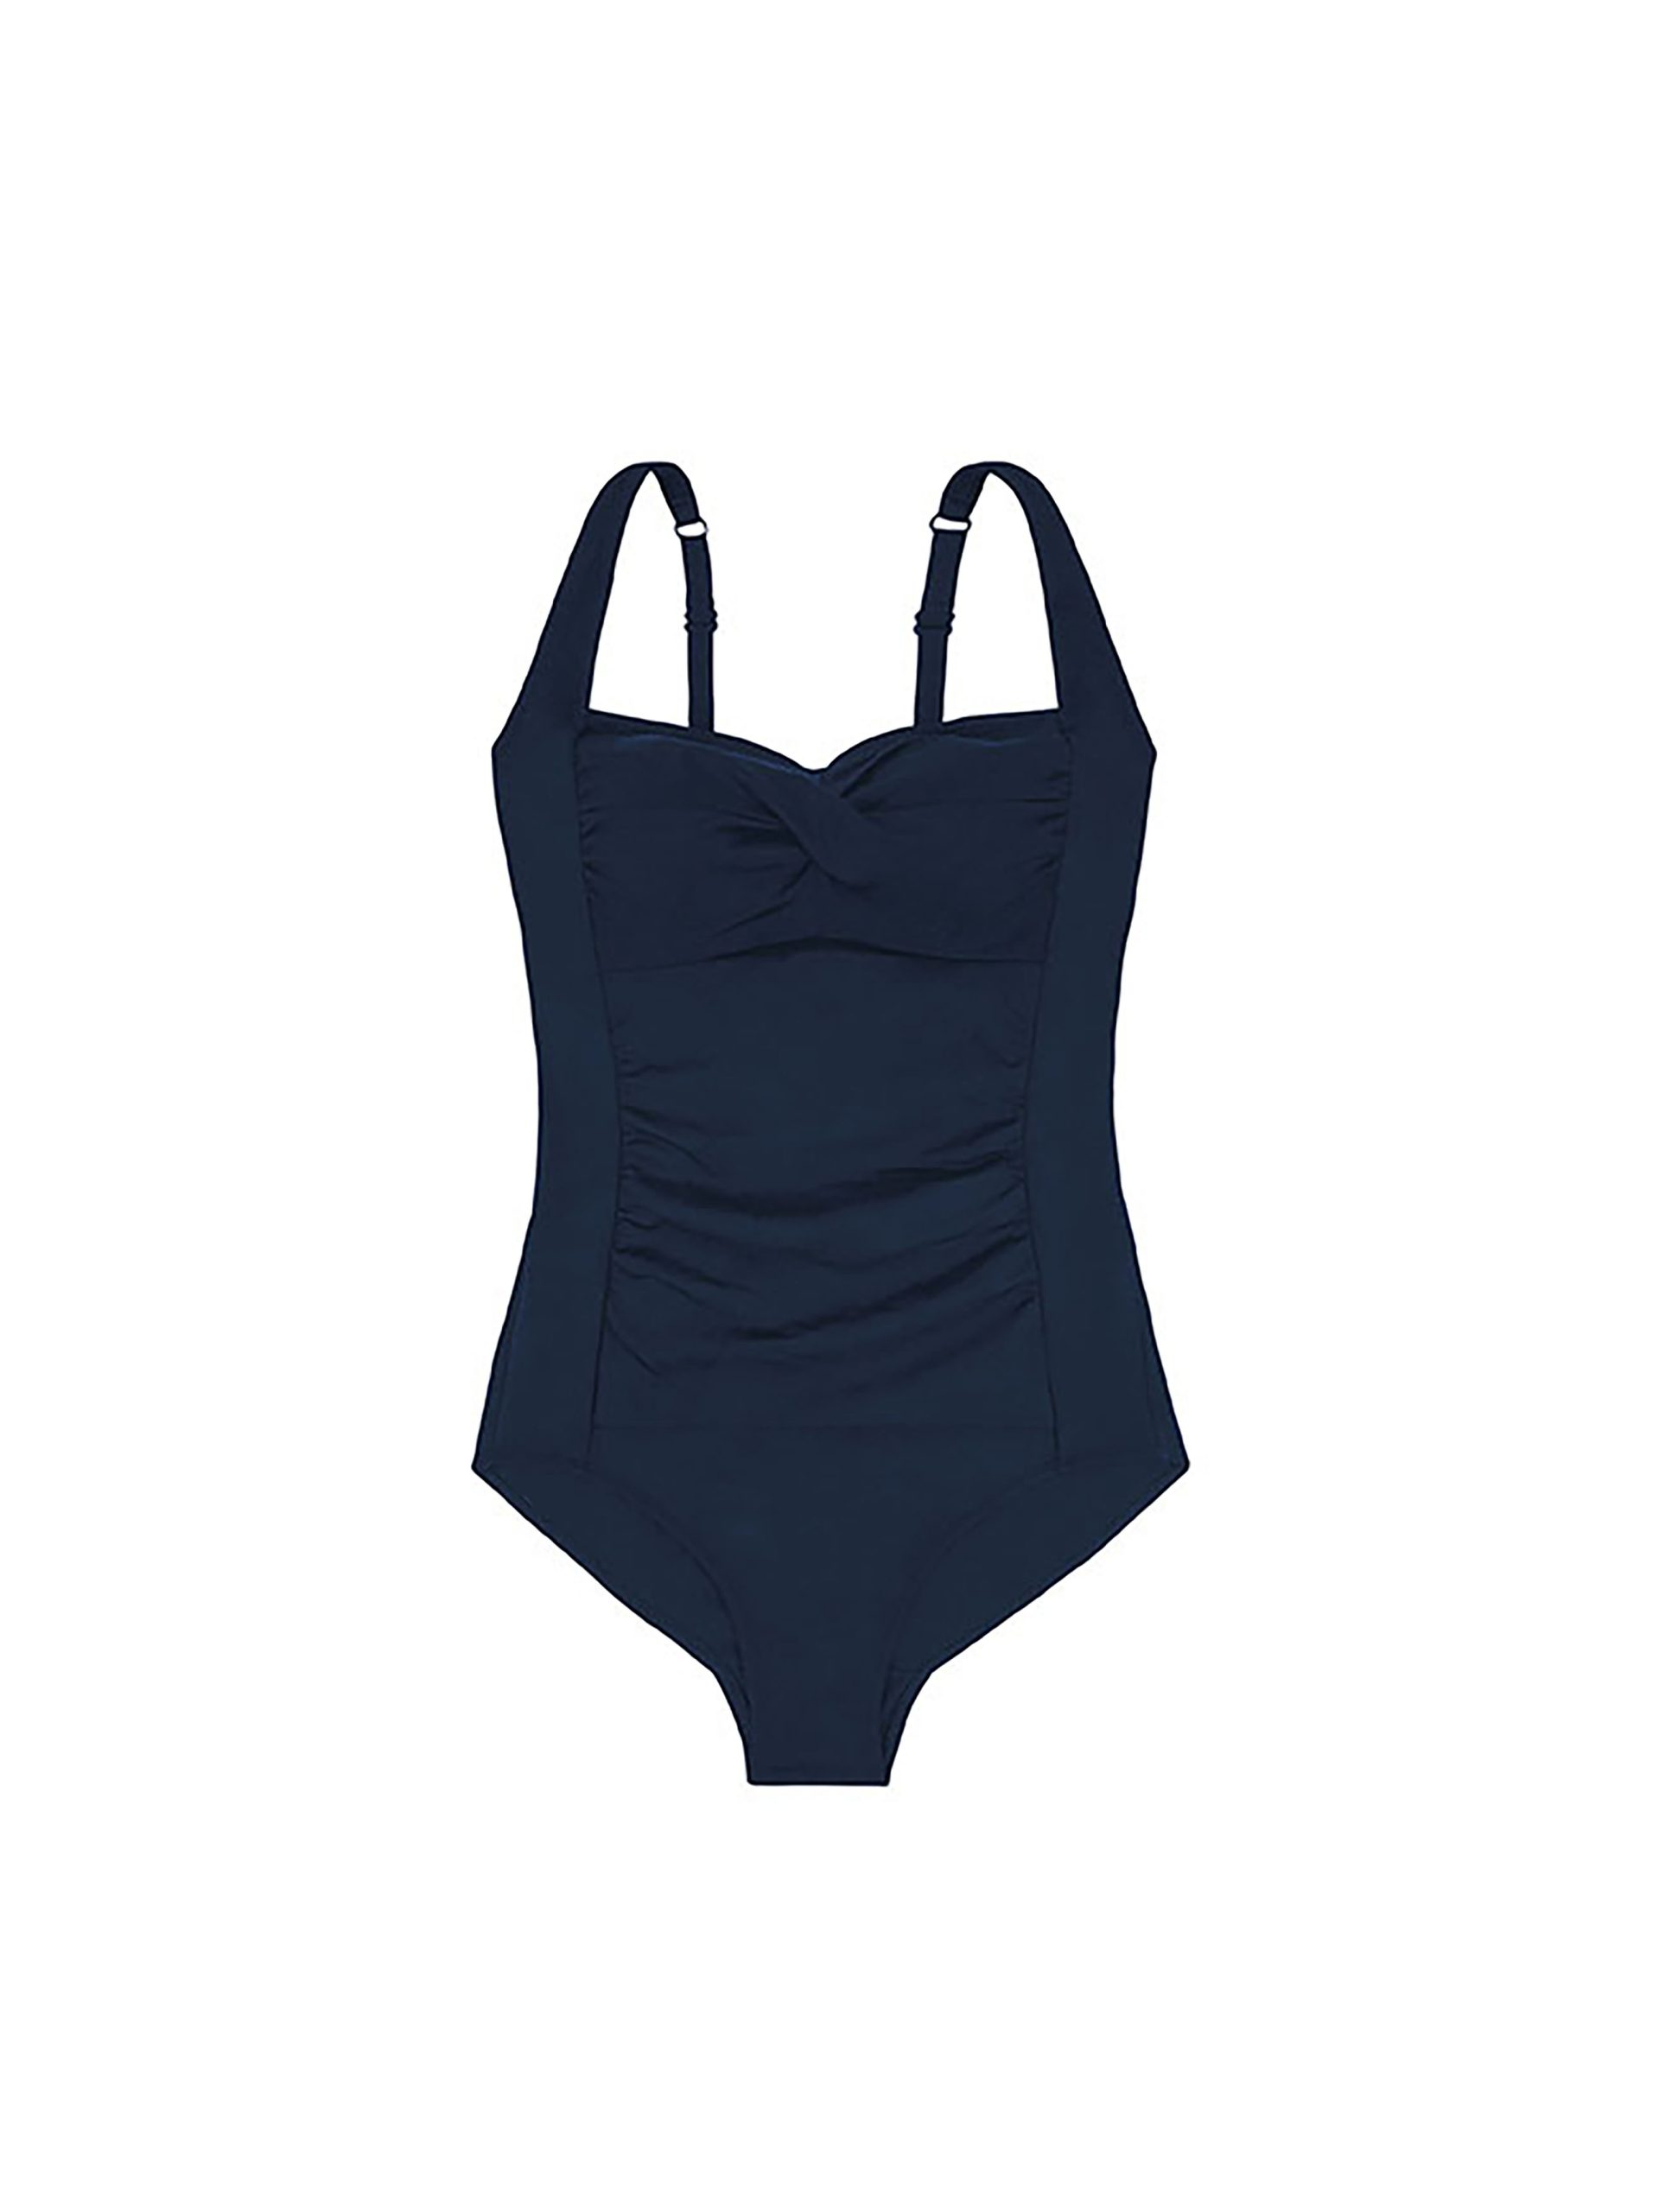 Kes-Vir® Womens Incontinence Tankini Short Set Swimwear - Indigo Wave/Black